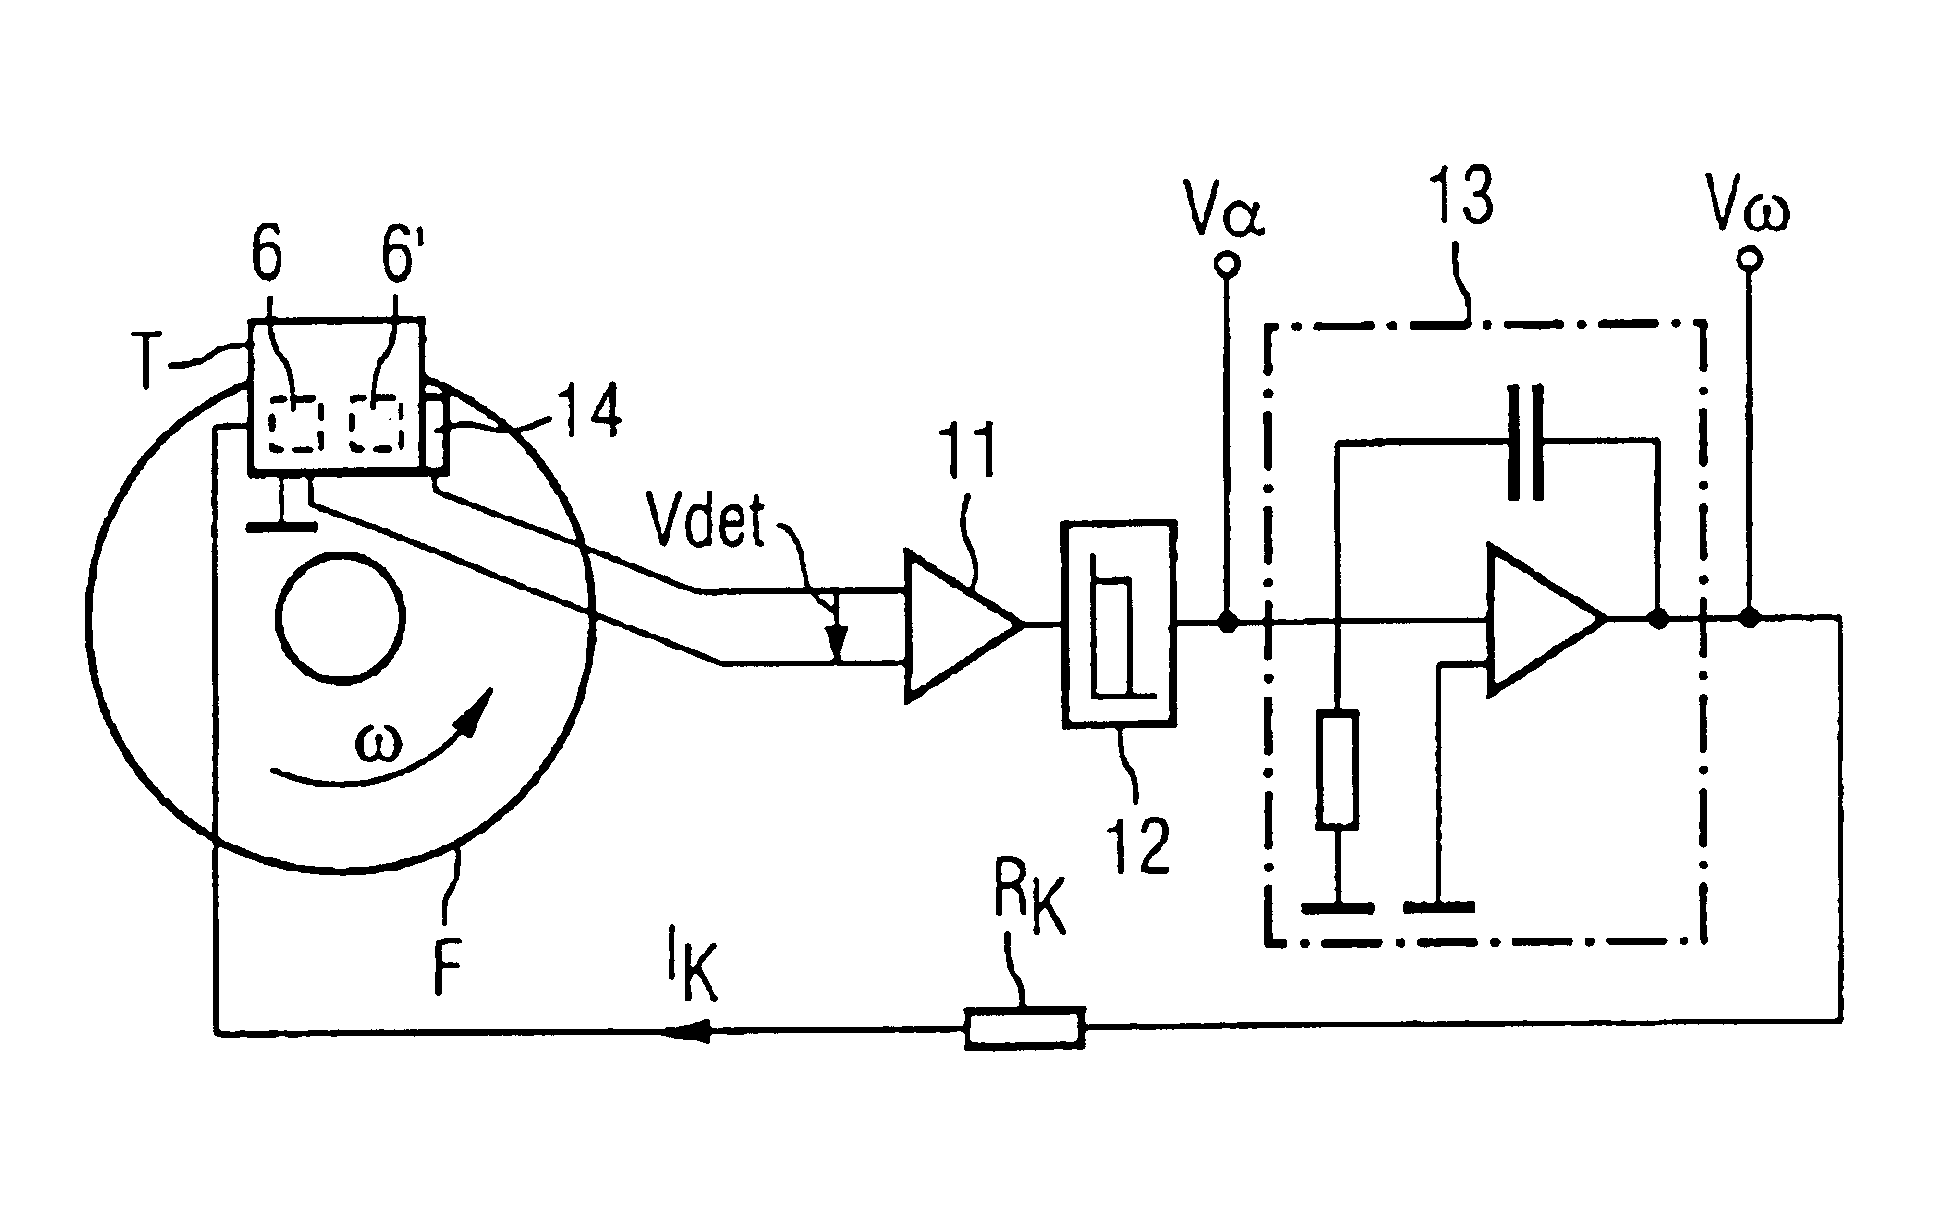 Circuit arrangement for evaluating an acceleration sensor using the Ferraris principle